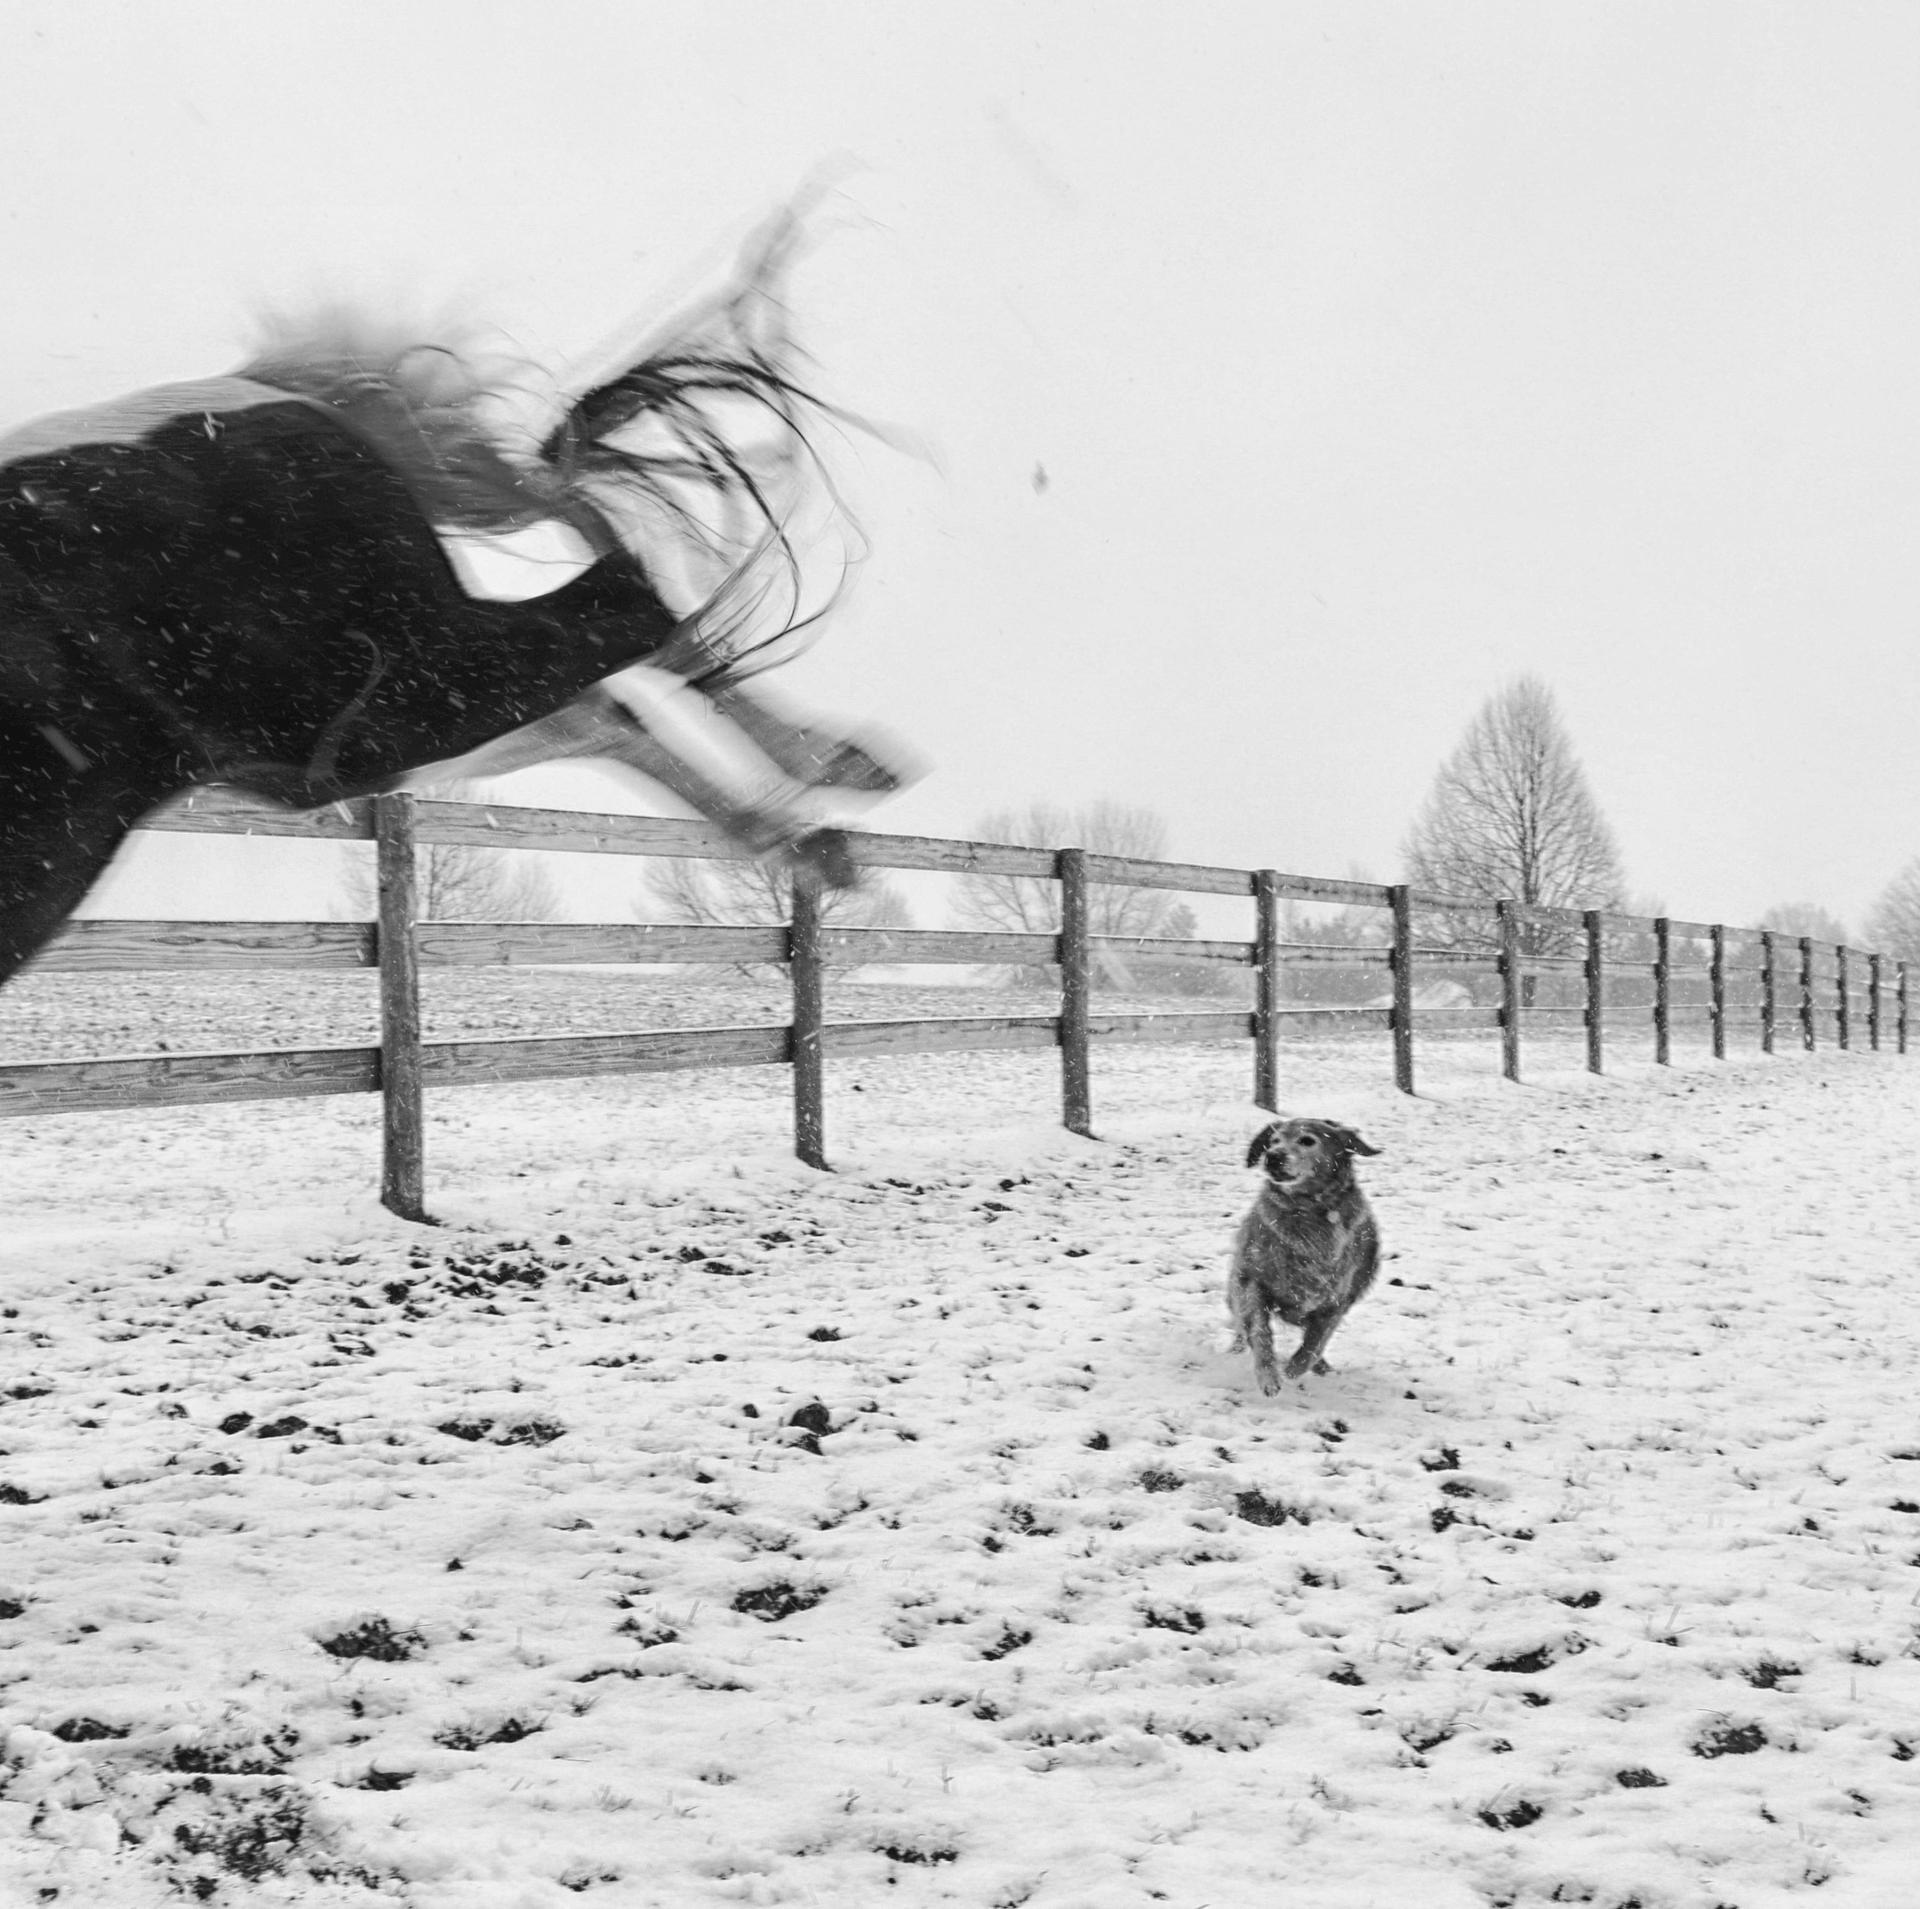 London Photography Awards Winner - Equus: The Horse